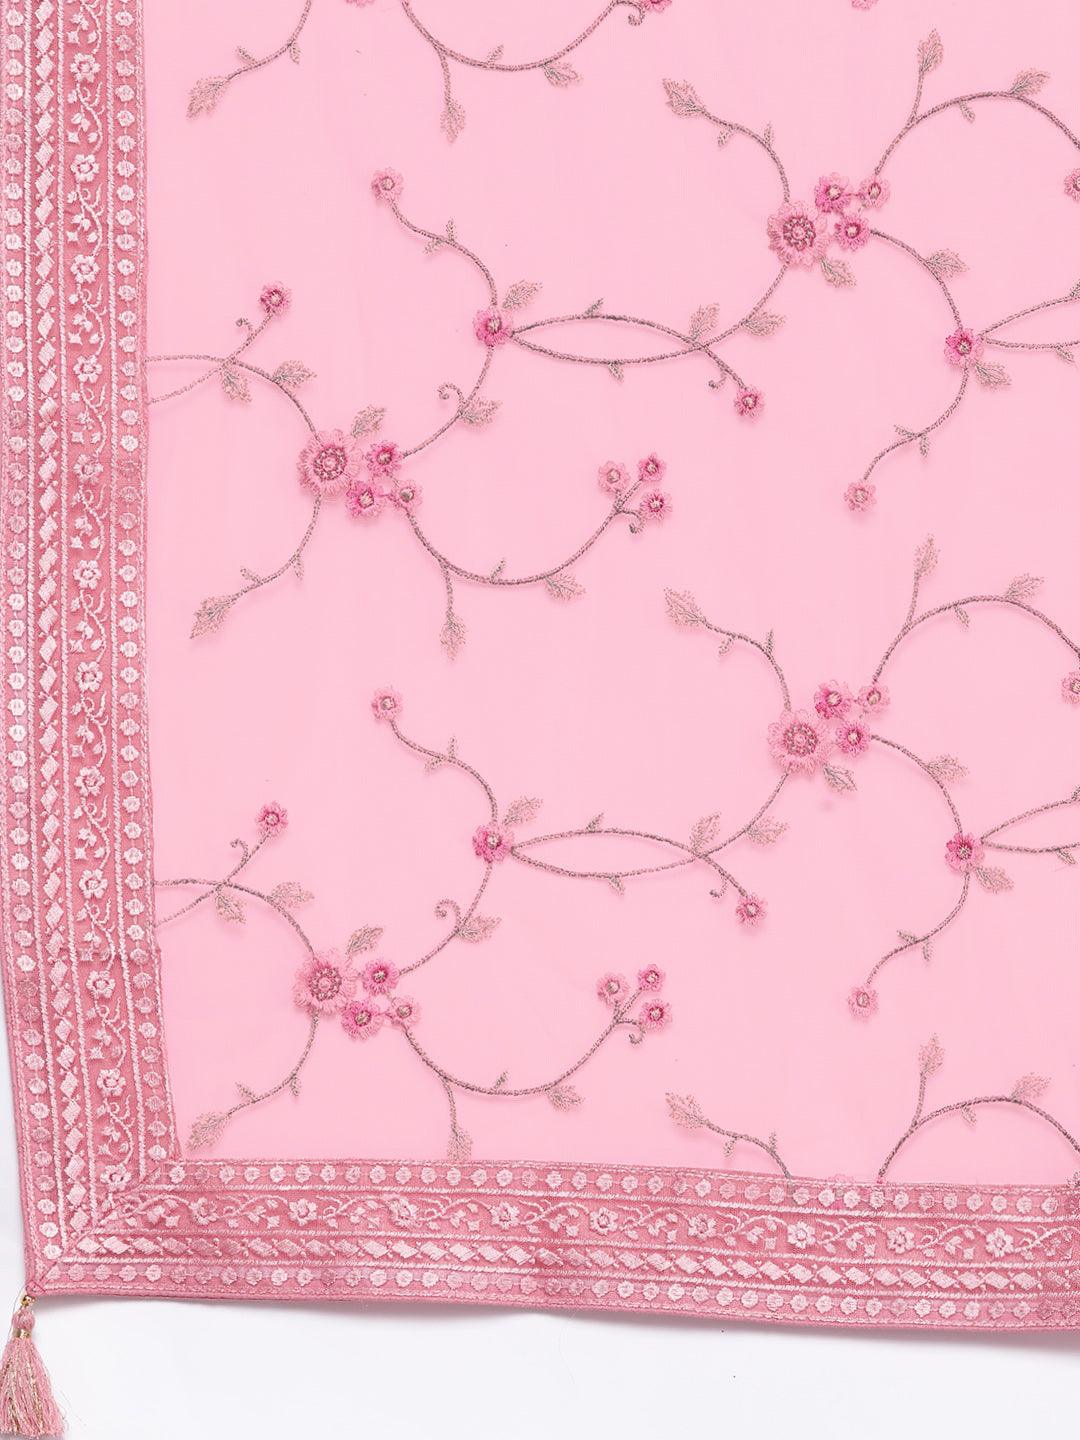 Libas Art Pink Yoke Design Silk Anarkali Suit With Dupatta